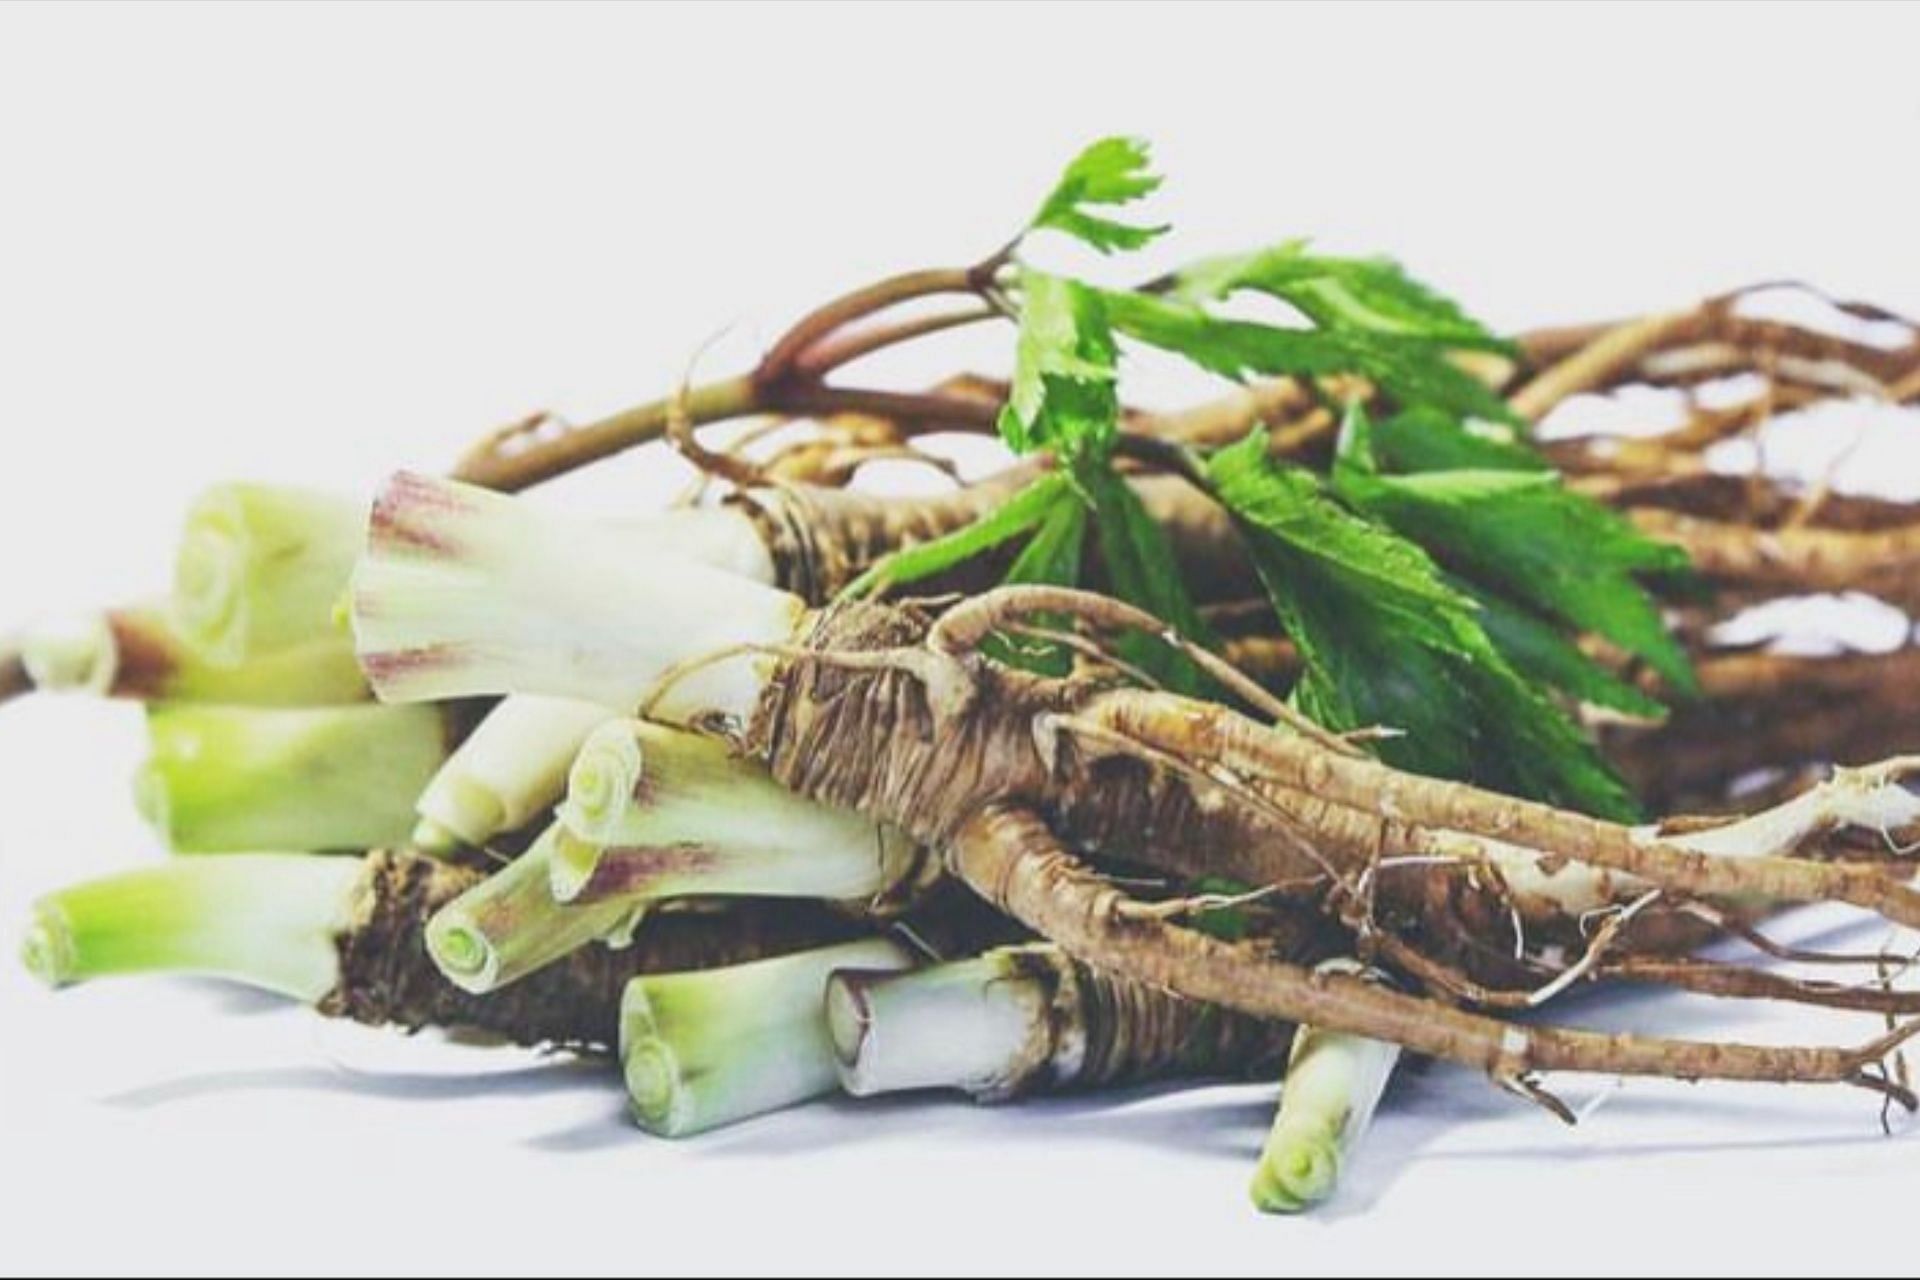 The herb offers several benefits. (Photo via Instagram/katiebarronnaturopath)